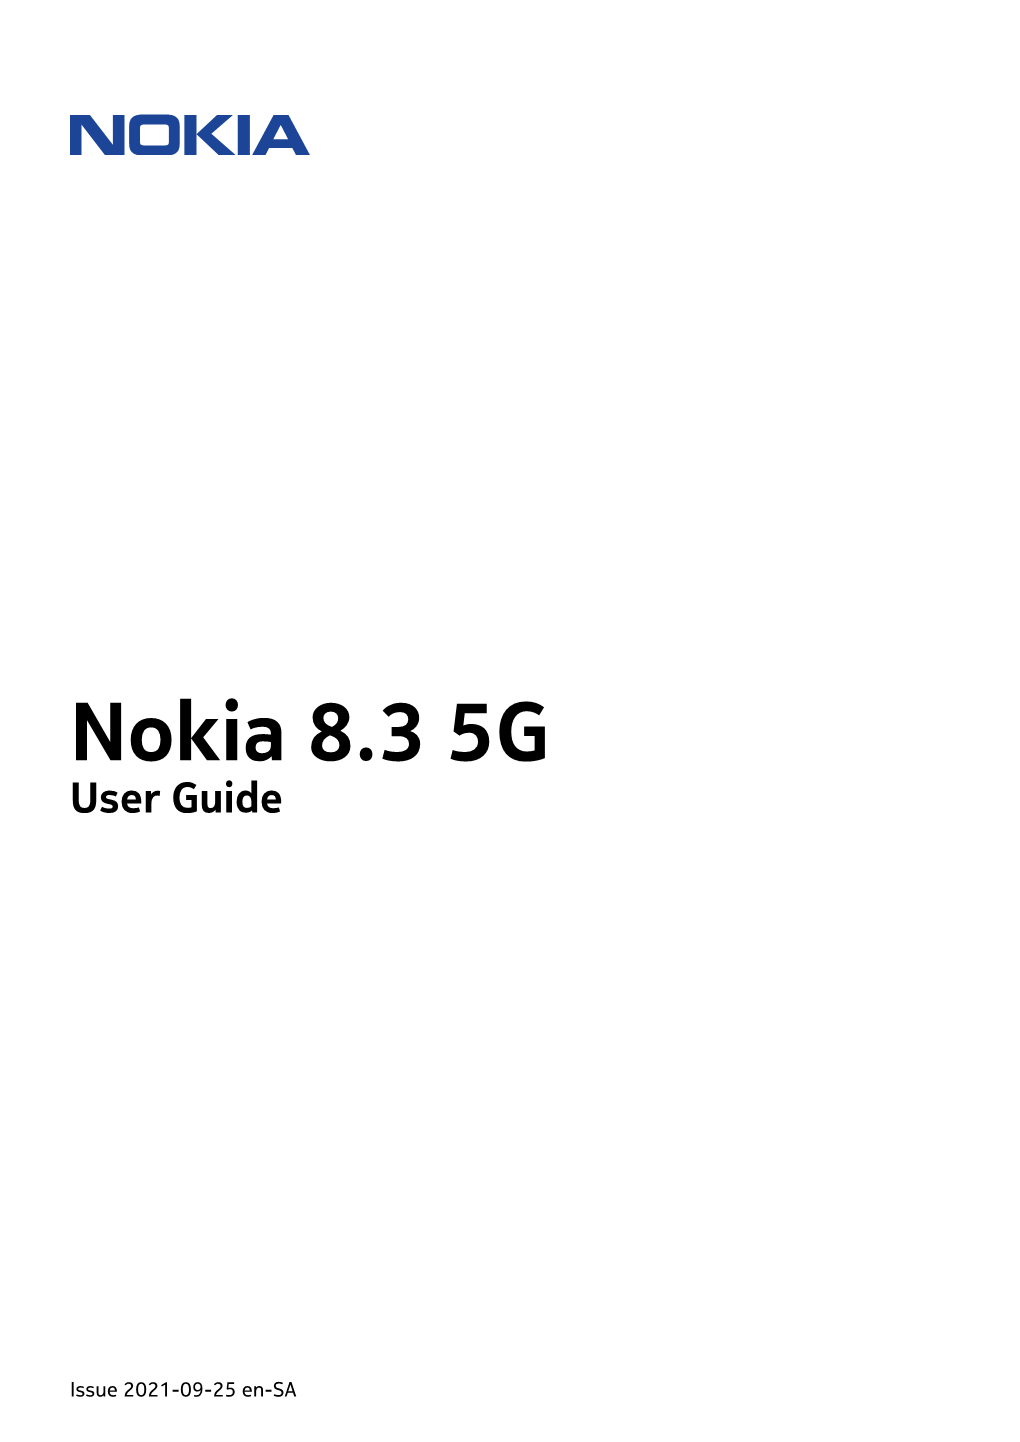 Nokia 8.3 5G User Guide